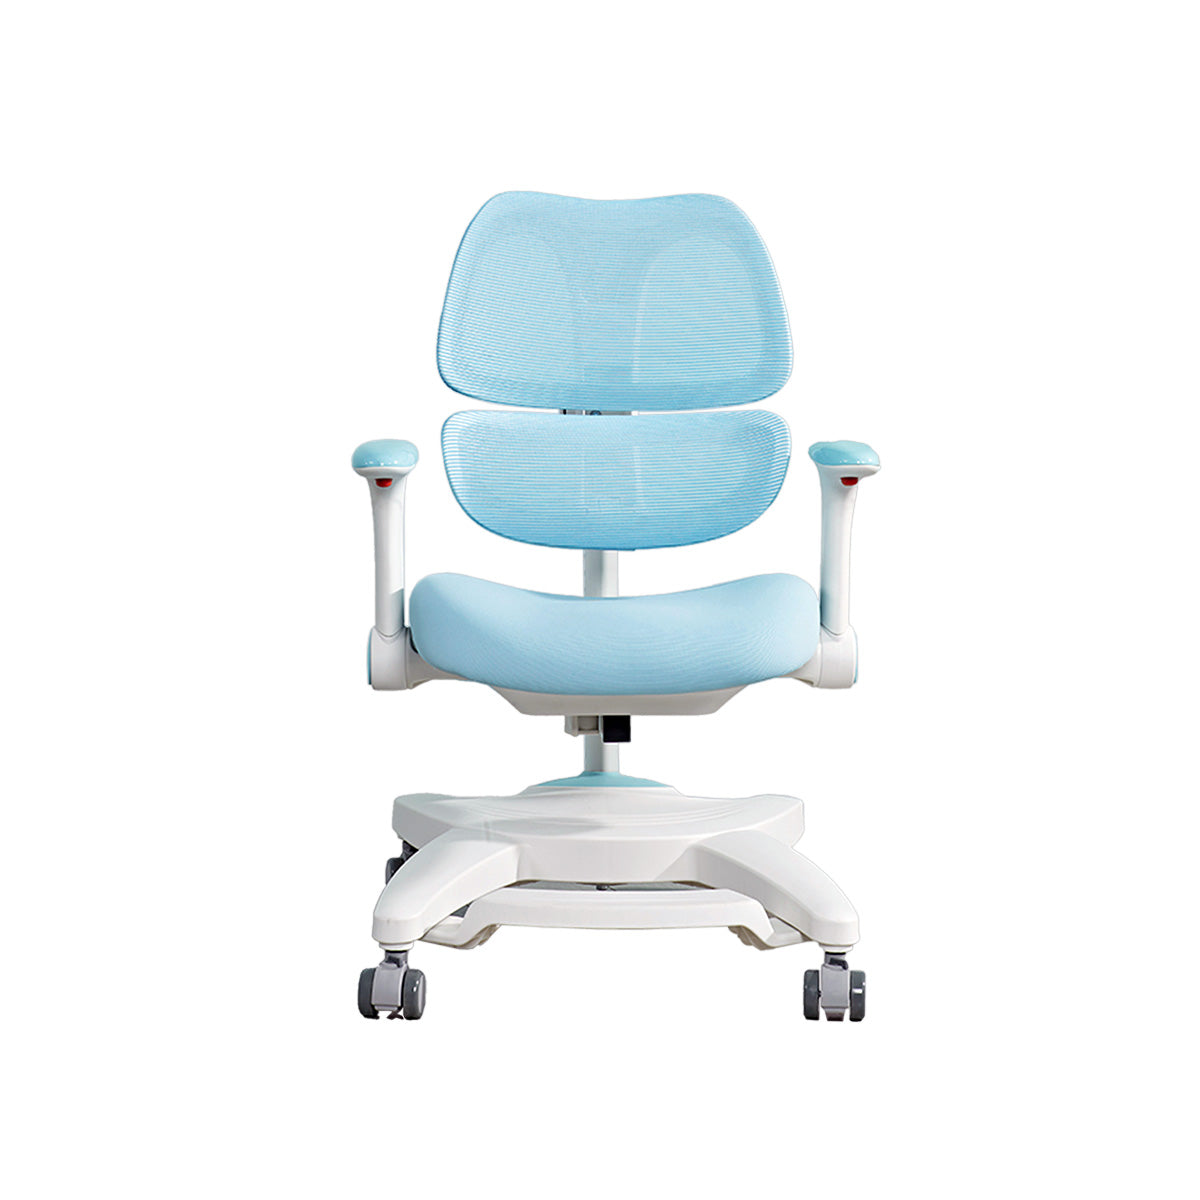 IMPACT Kids Ergonomic Chair With Arm Rest, Blue